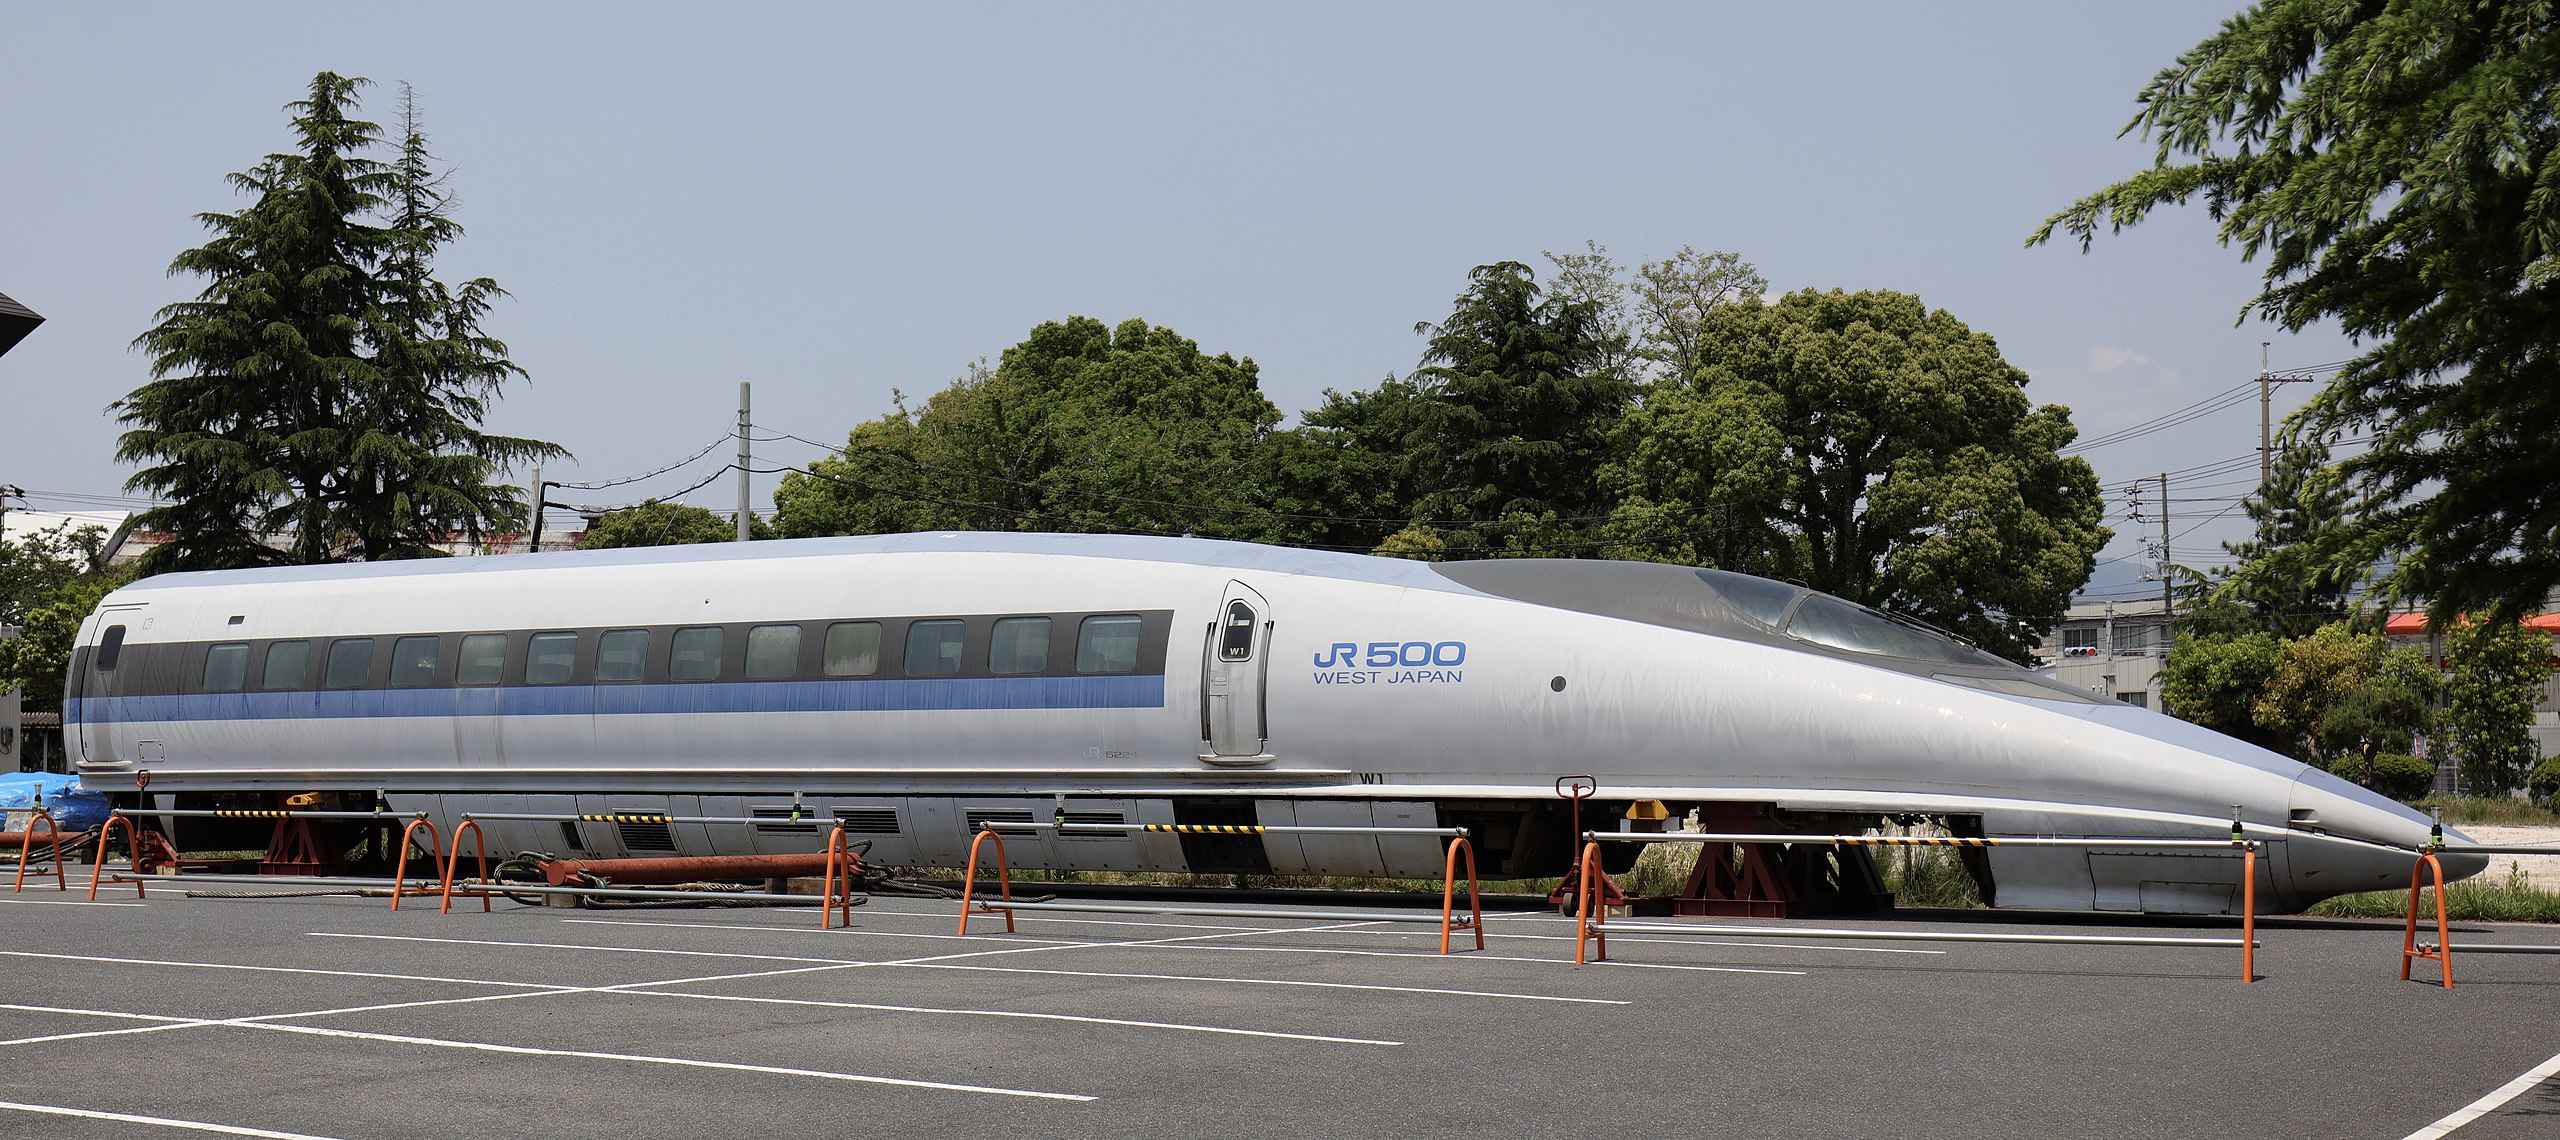 File:Shinkansen Series 500 522-1 in Hitachi.jpg - Wikipedia